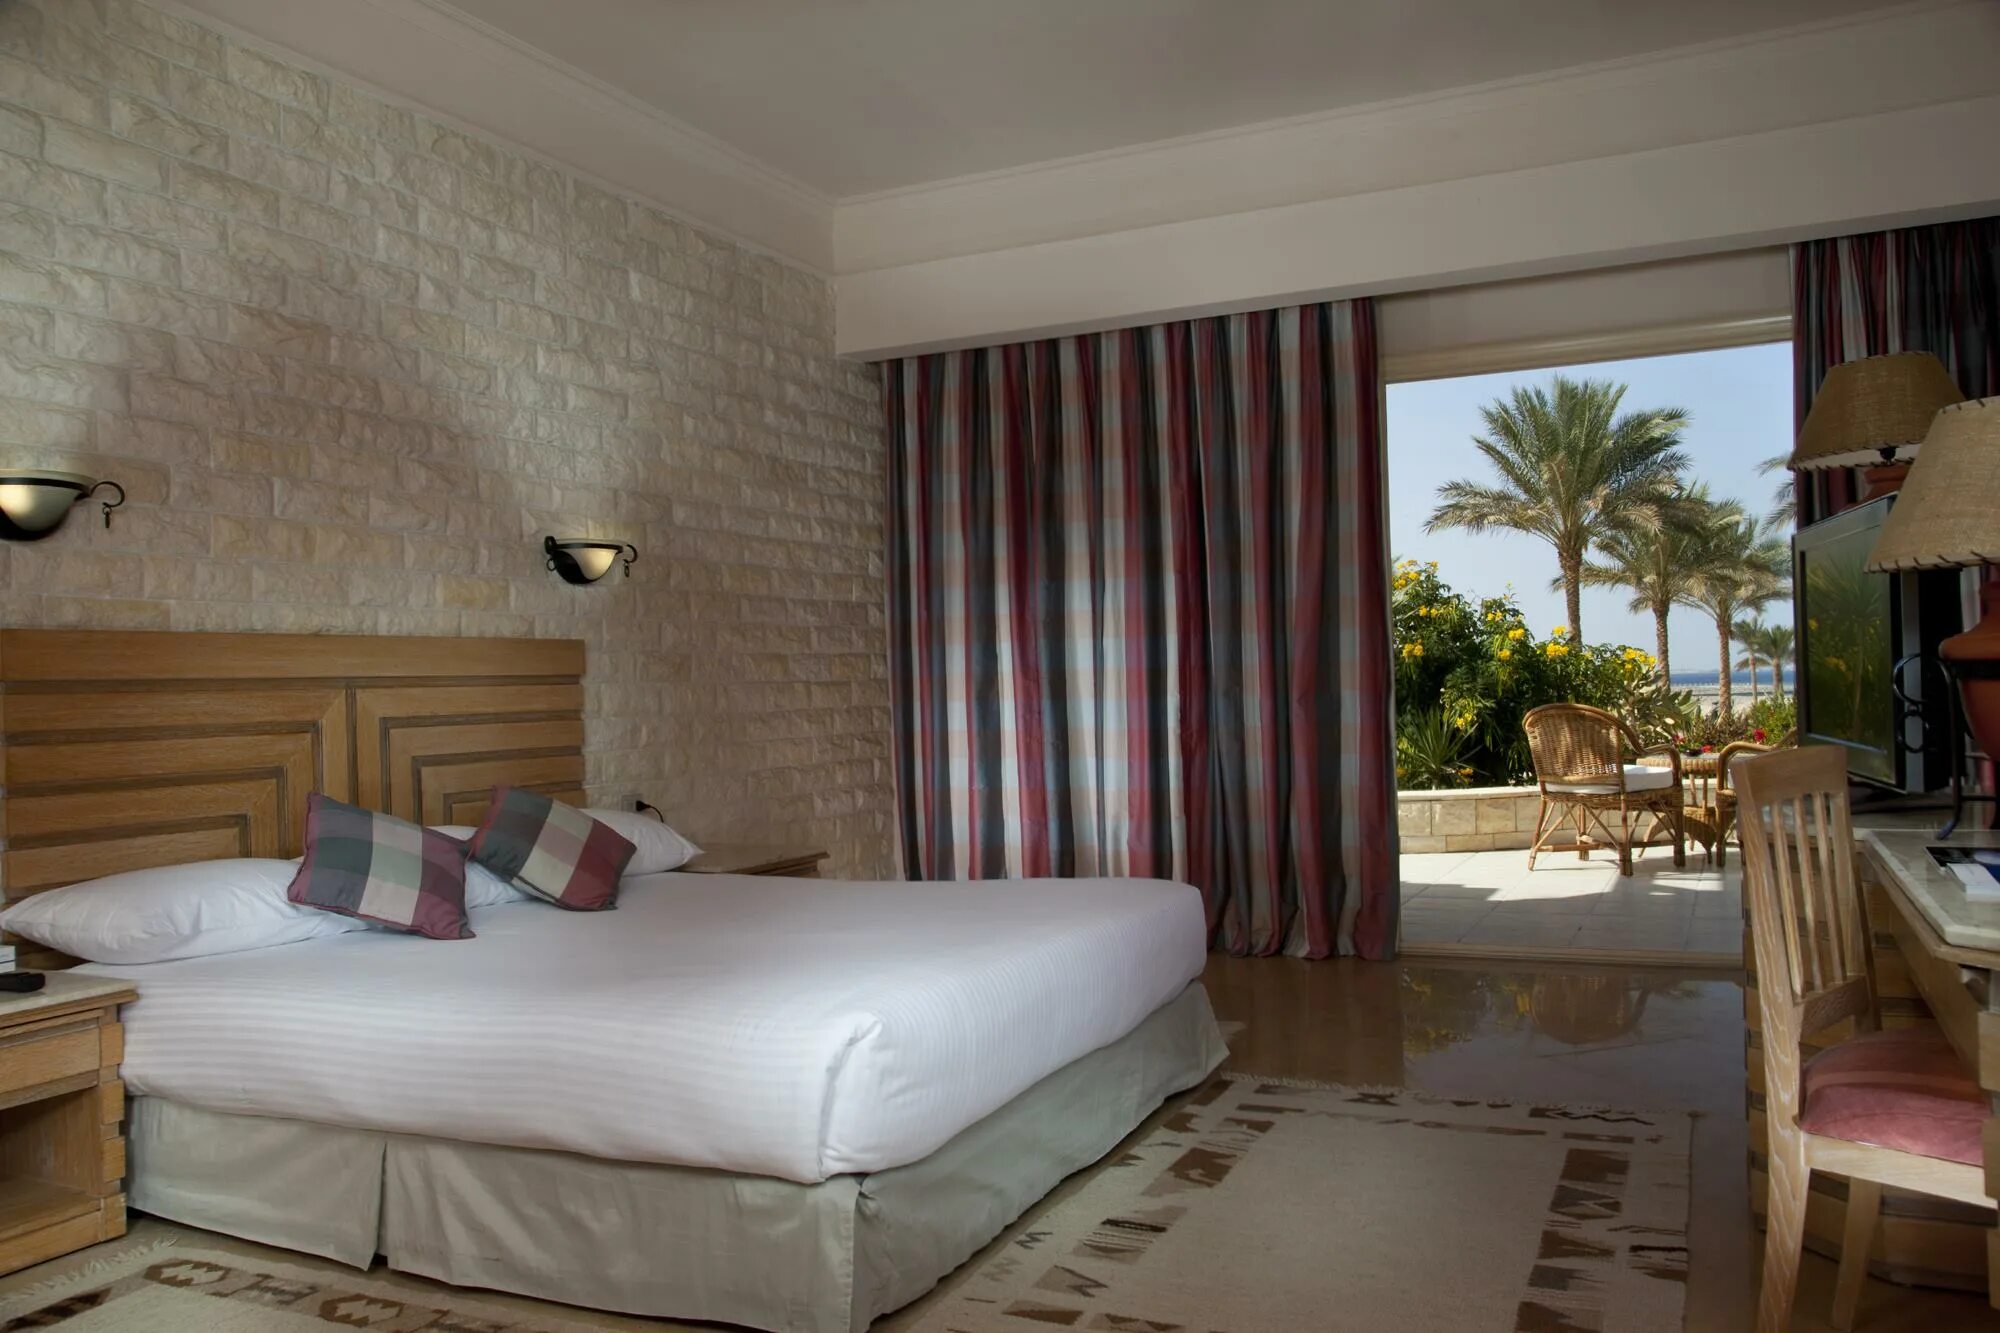 Coral beach resort хургада. Отель Coral Beach Resort Hurghada. Отель Coral Beach Hotel Hurghada 4*. Отель Корал Бич ротана Резорт Хургада. Ротана Хургада отель Корал Бич.